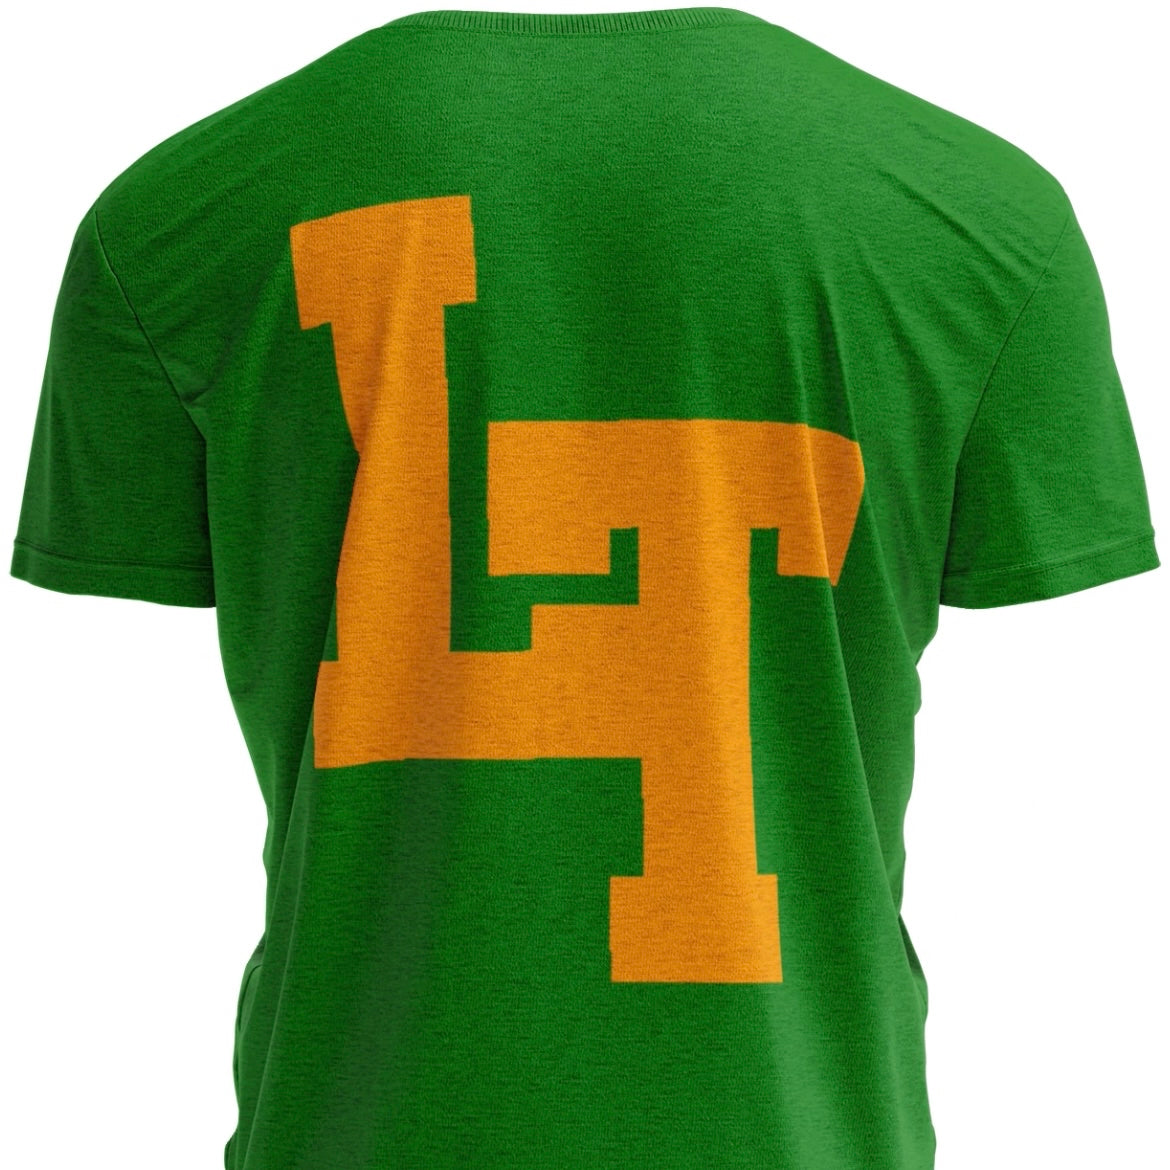 LT Signature Hand T-Shirt (Green)